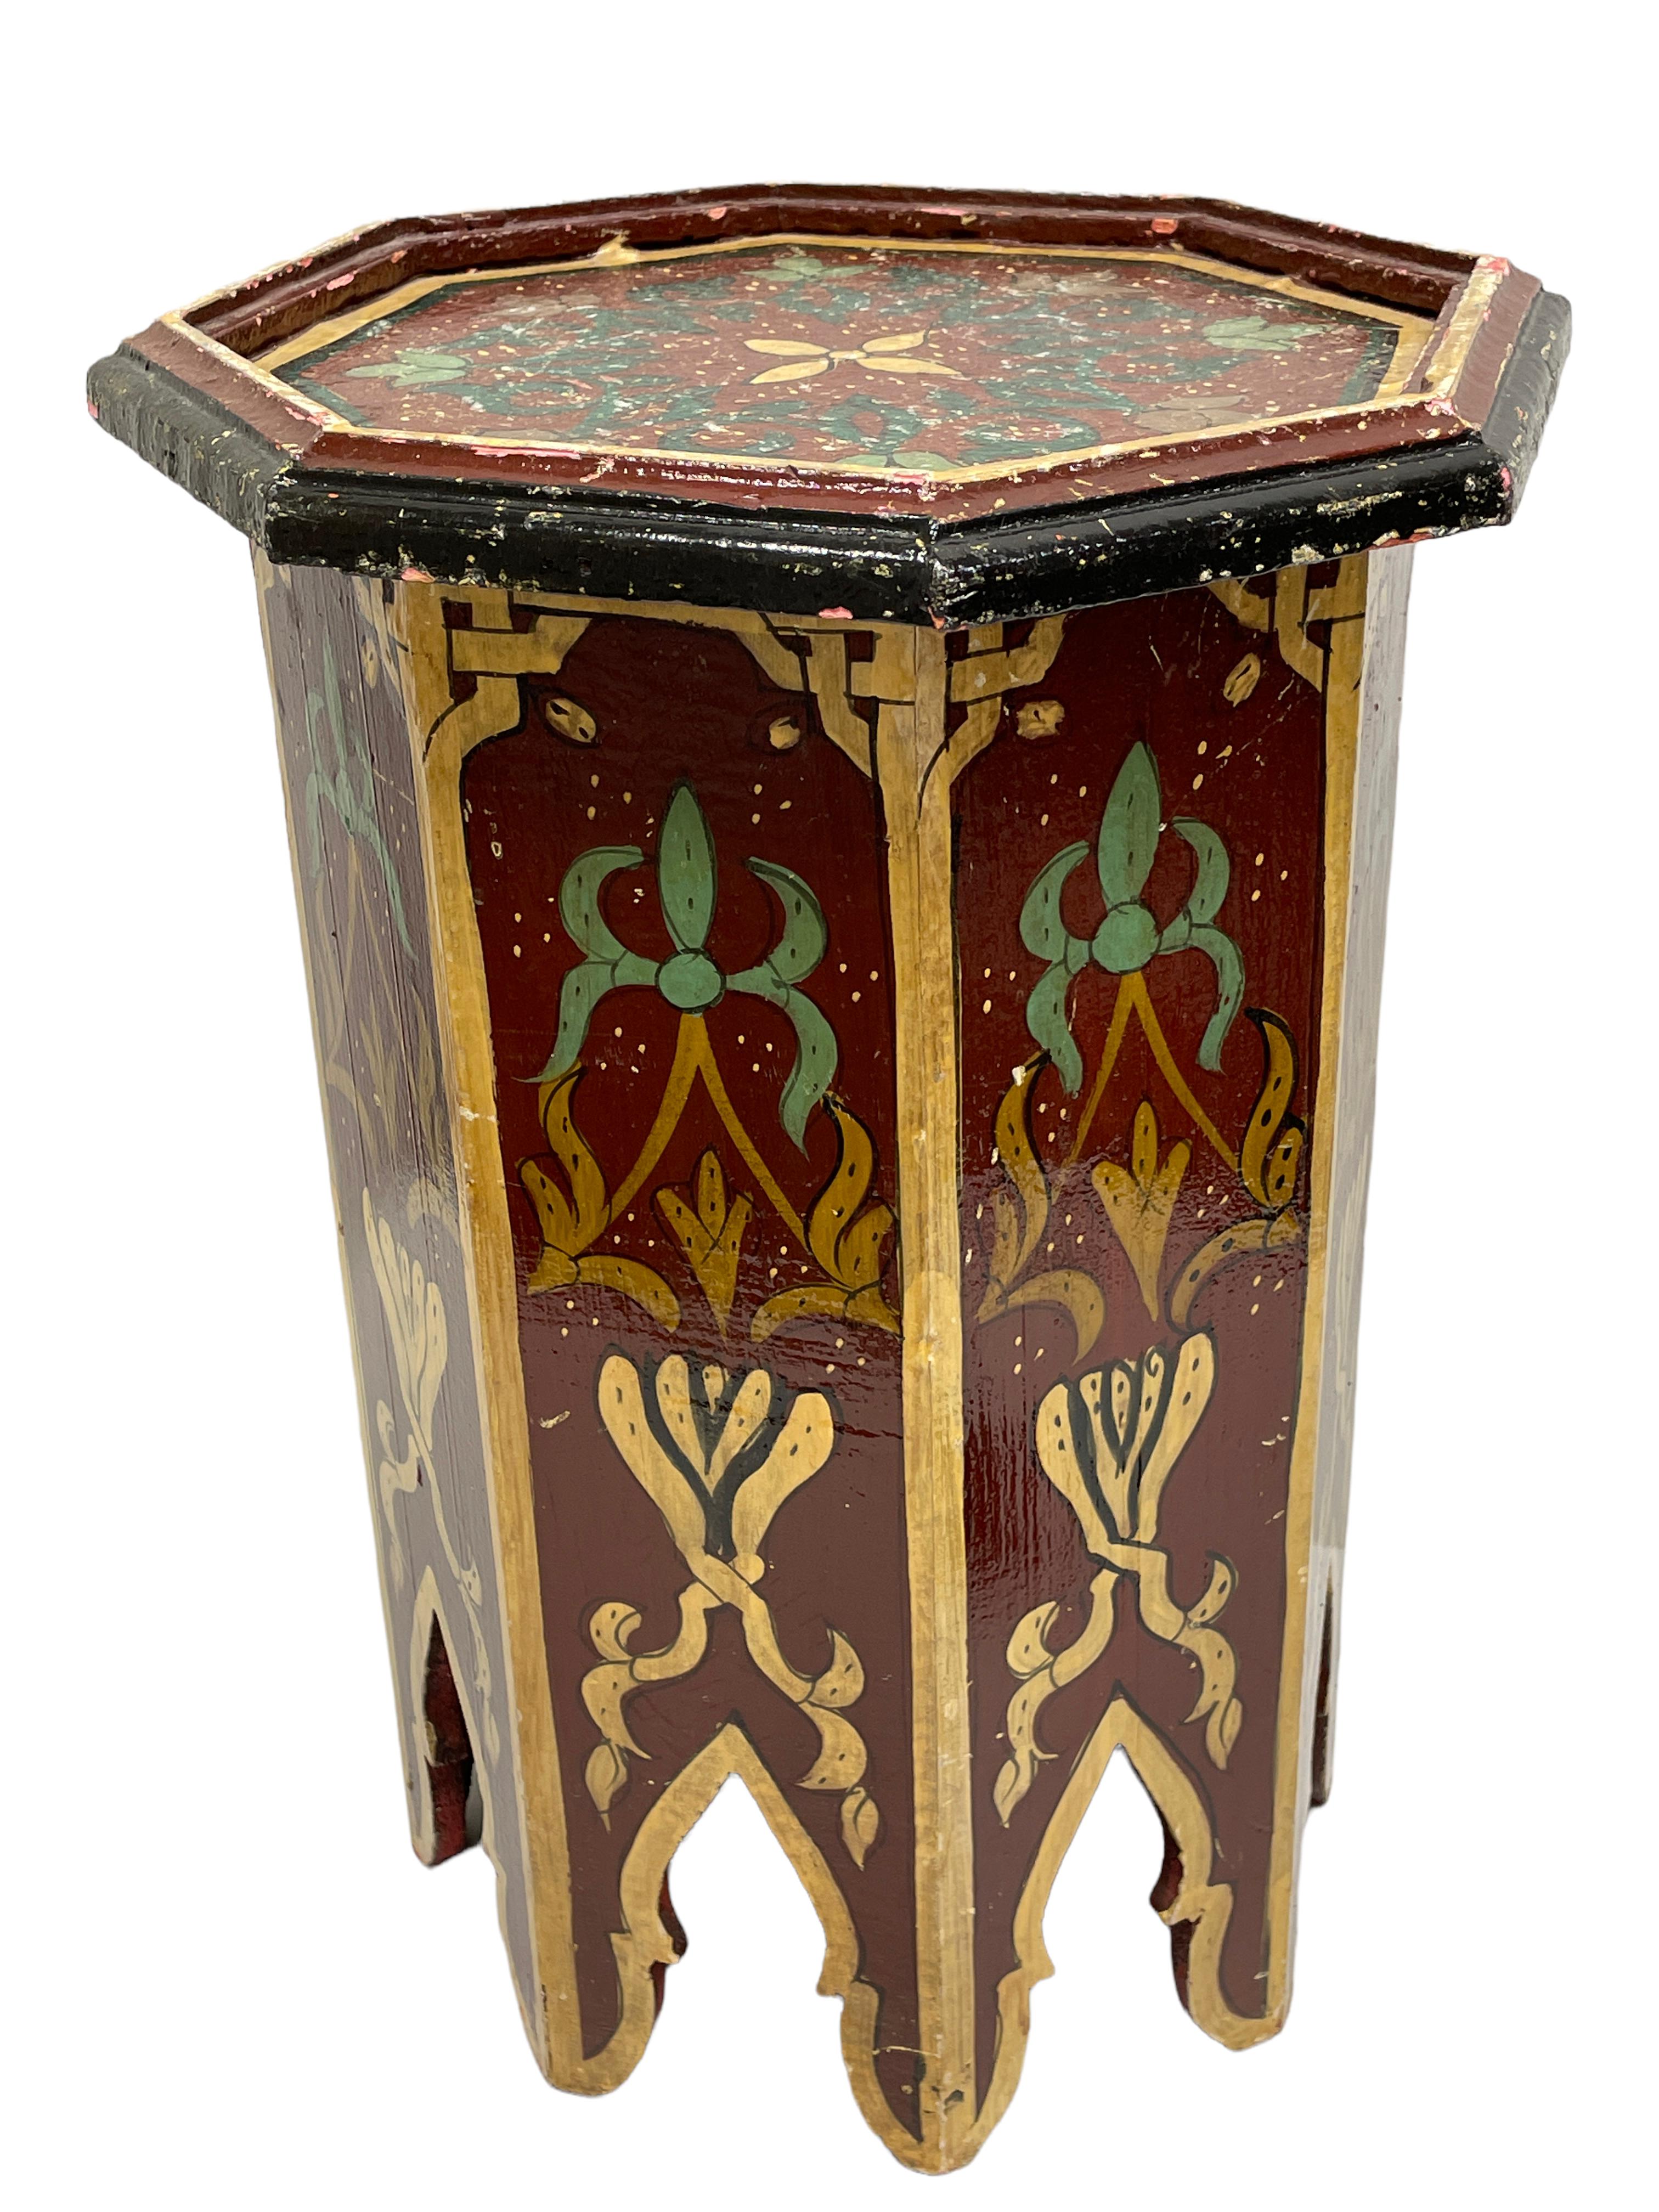 Moorish Moroccan Style Diminutive Painted Hexagonal Table